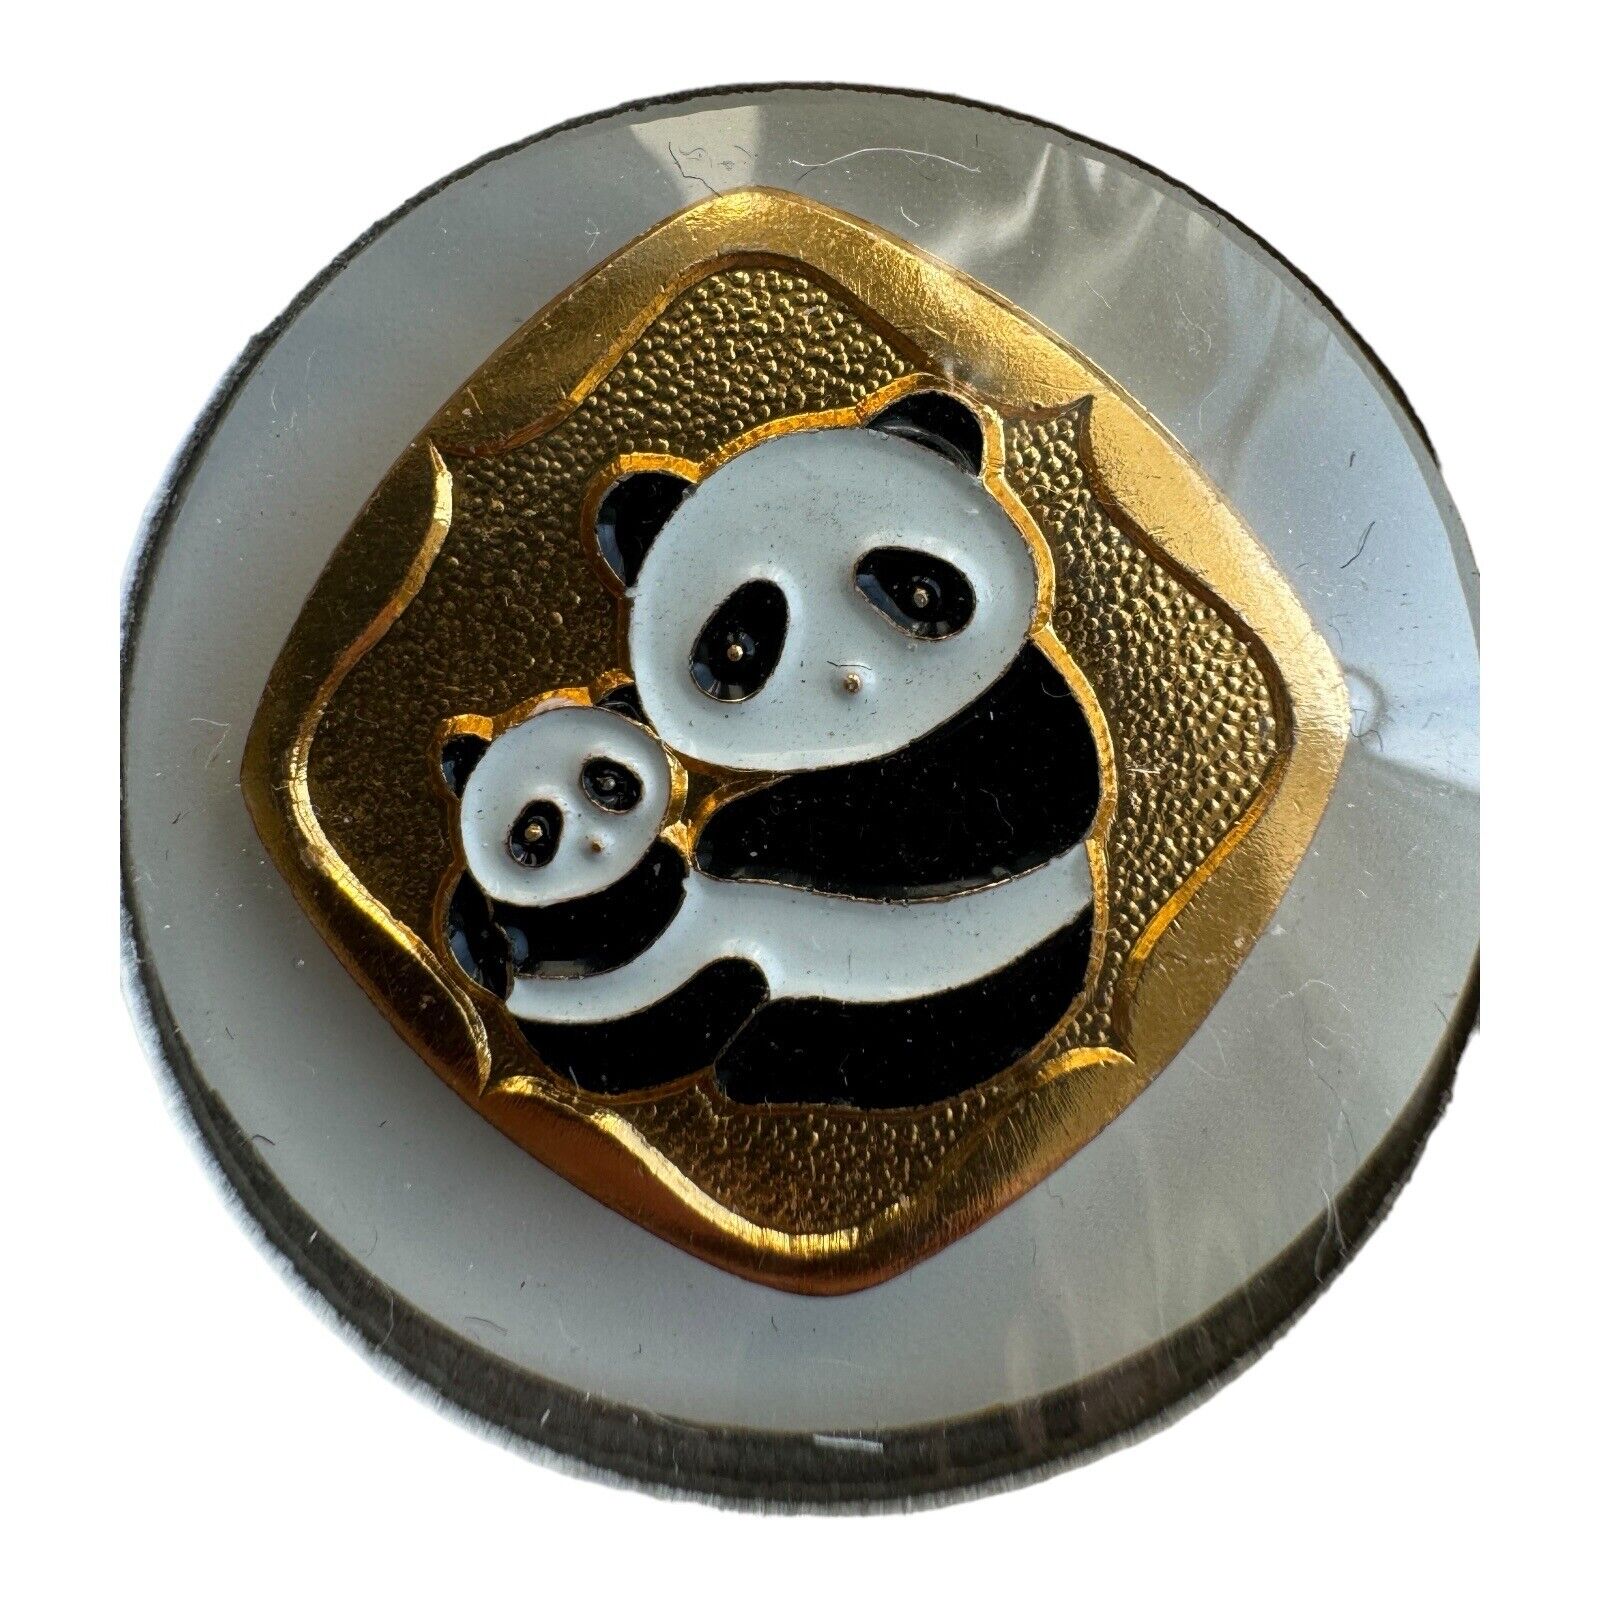 Vintage 1970s-1980s Chinese Exhibition Panda Pin Collectible Enamel Lapel Pin 1”